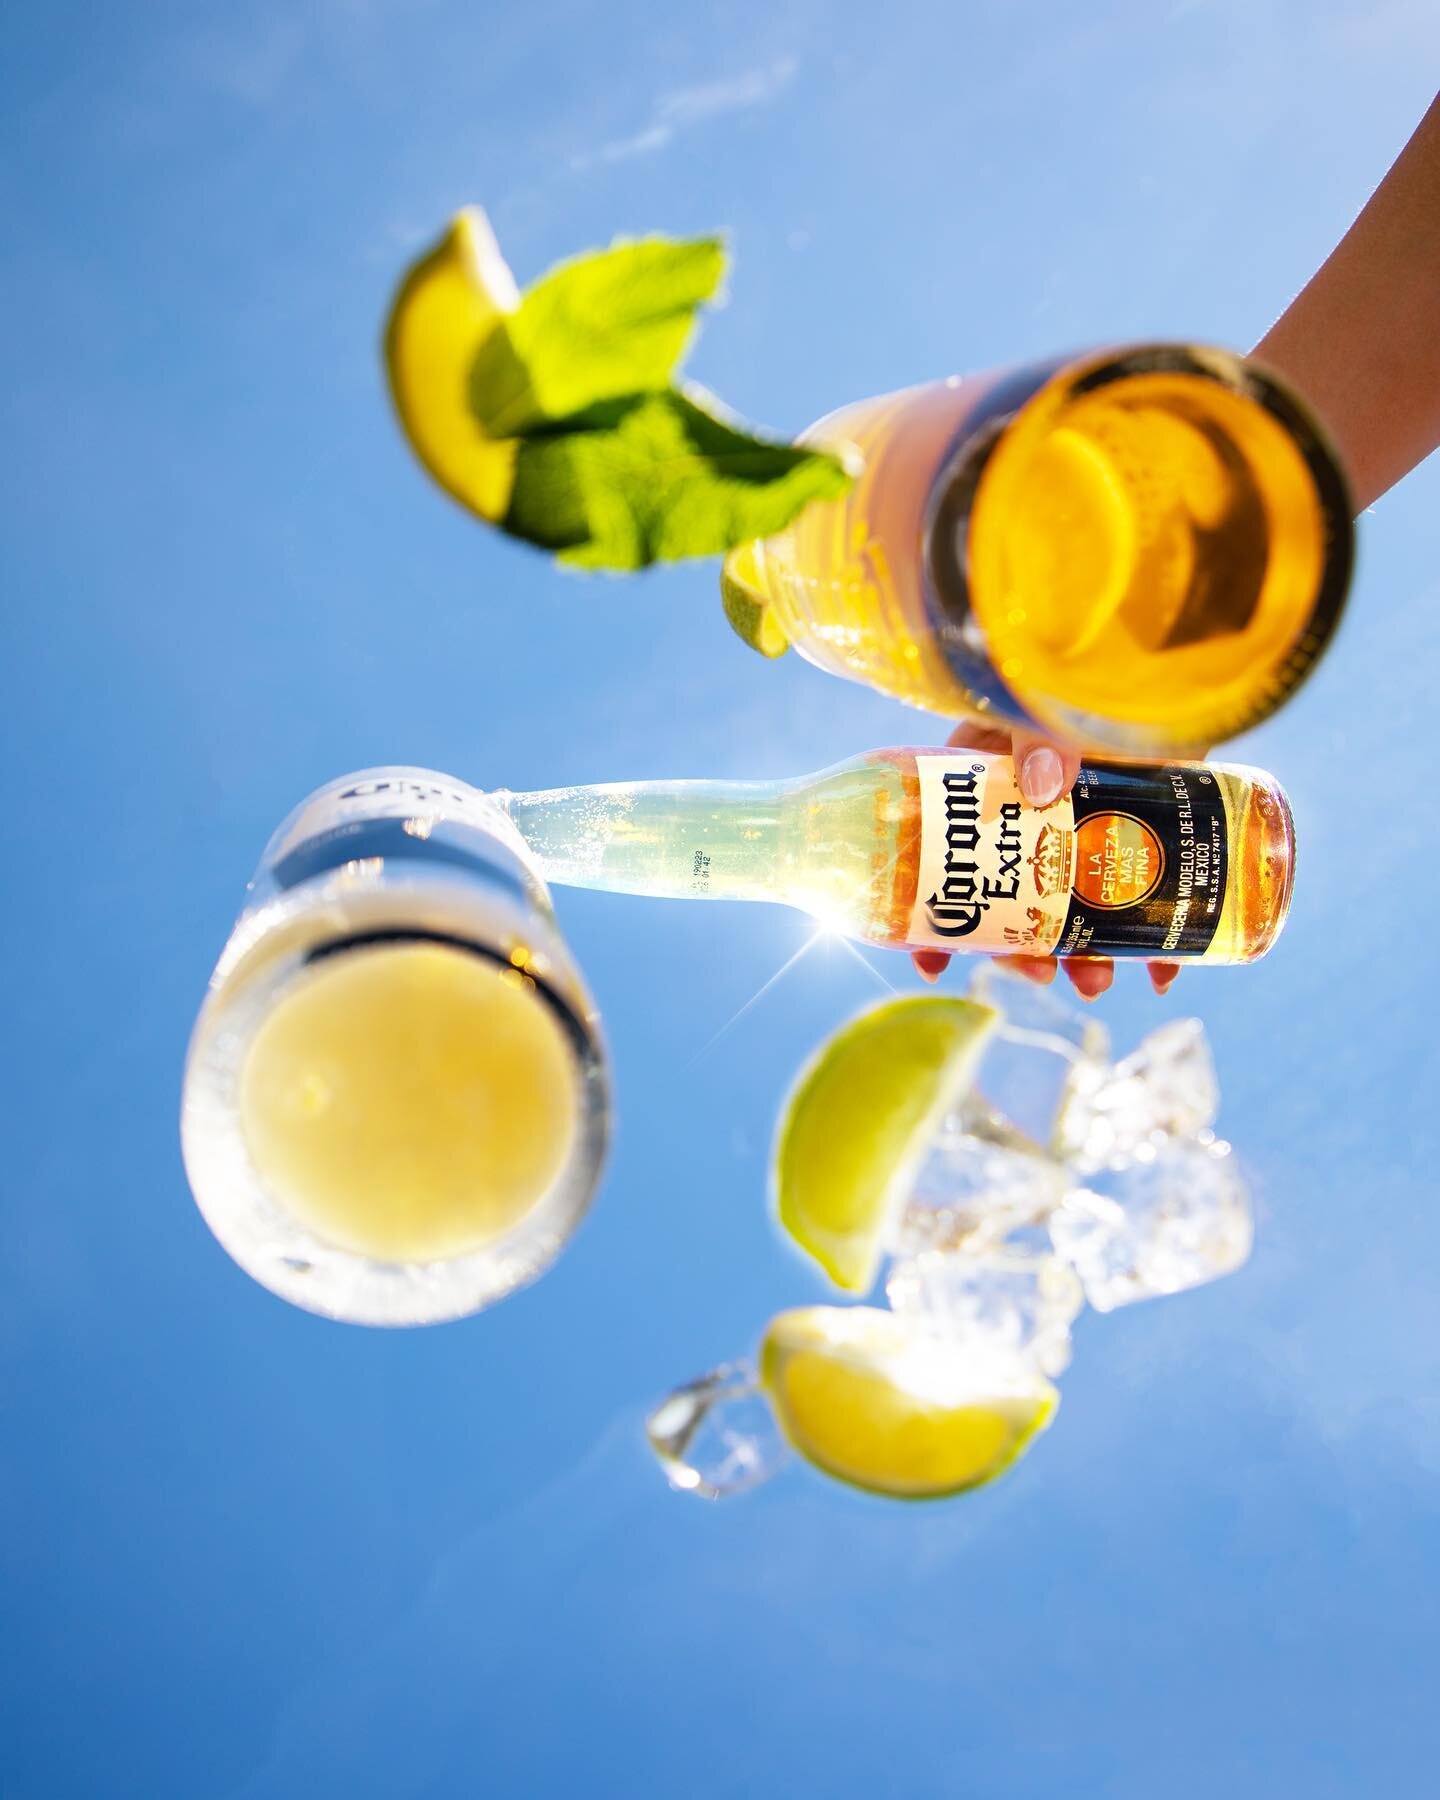 Ice cold Corona on hot Summer Days.💕
Your perfect Summer refreshment!
.
.
.
.
.
.
.
.
#deuces#bar#donauinsel#beacharea#summer2022#sun#enjoy#vienna#drinks#cocktail#hotgirlsummer#enjoylife#photography#drunk#paradise#friends#drinks#sunset @abinbev @cor